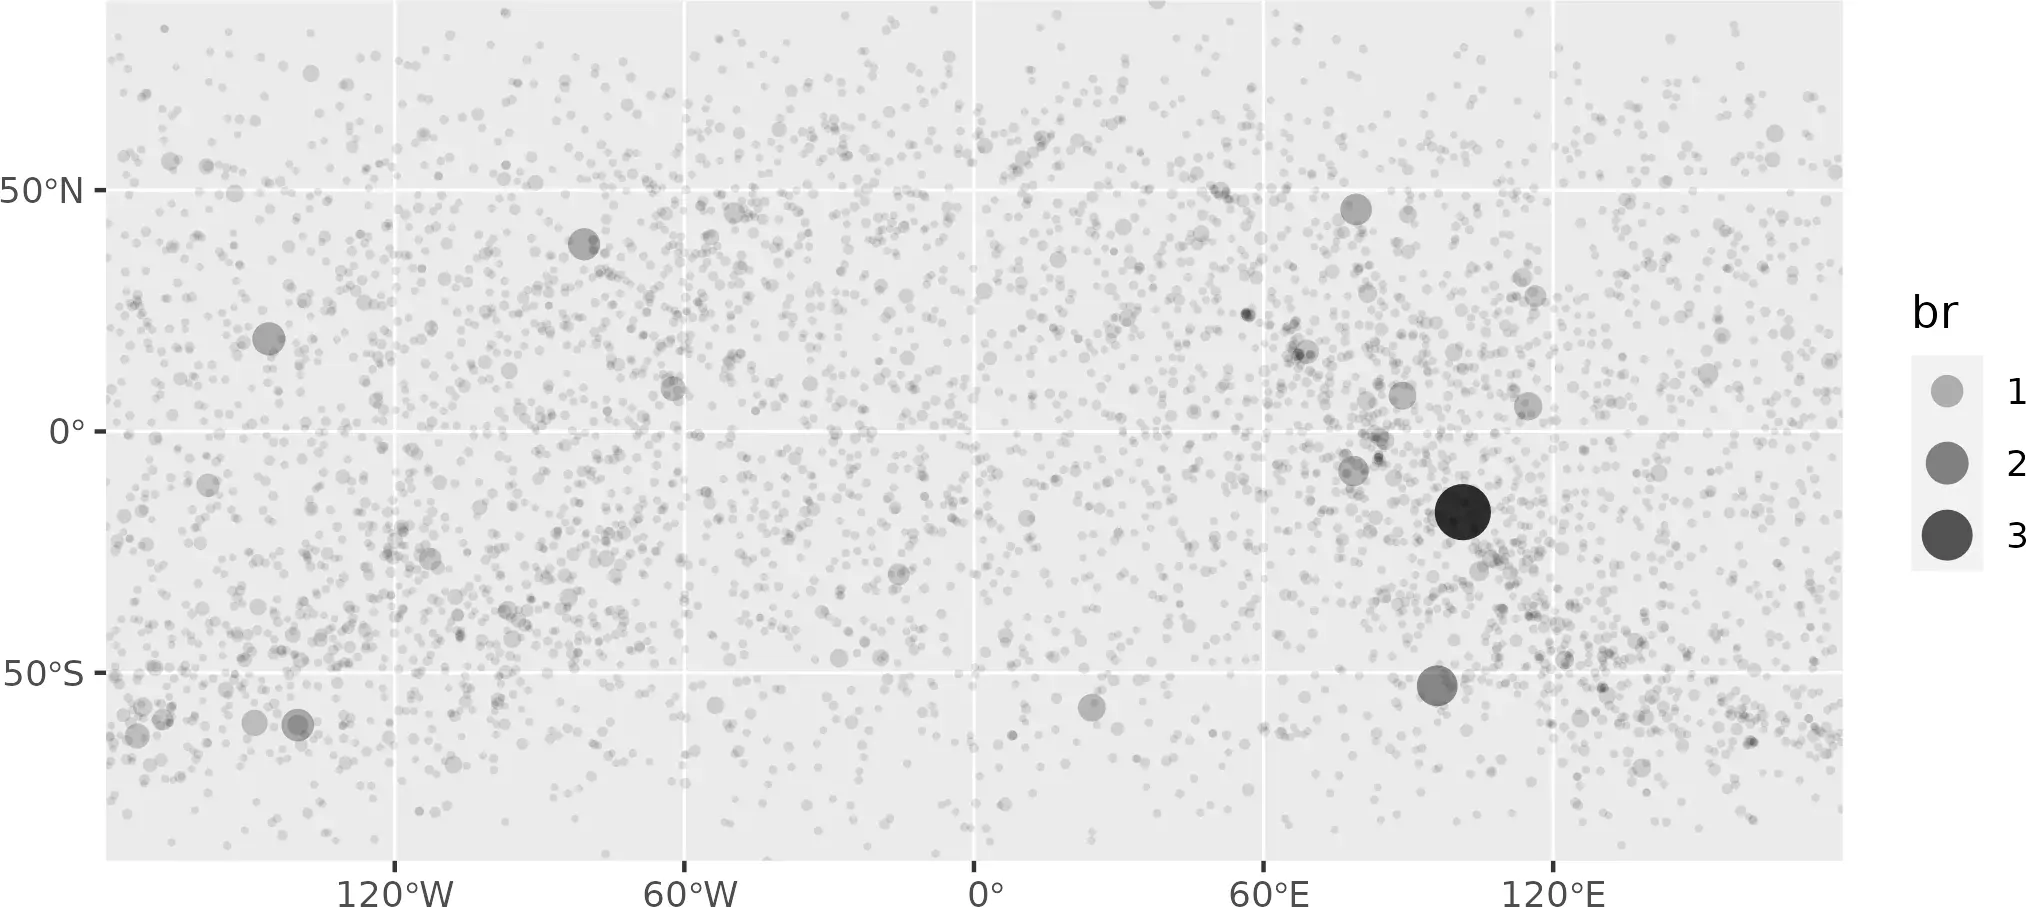 plot of chunk 20230125_stars